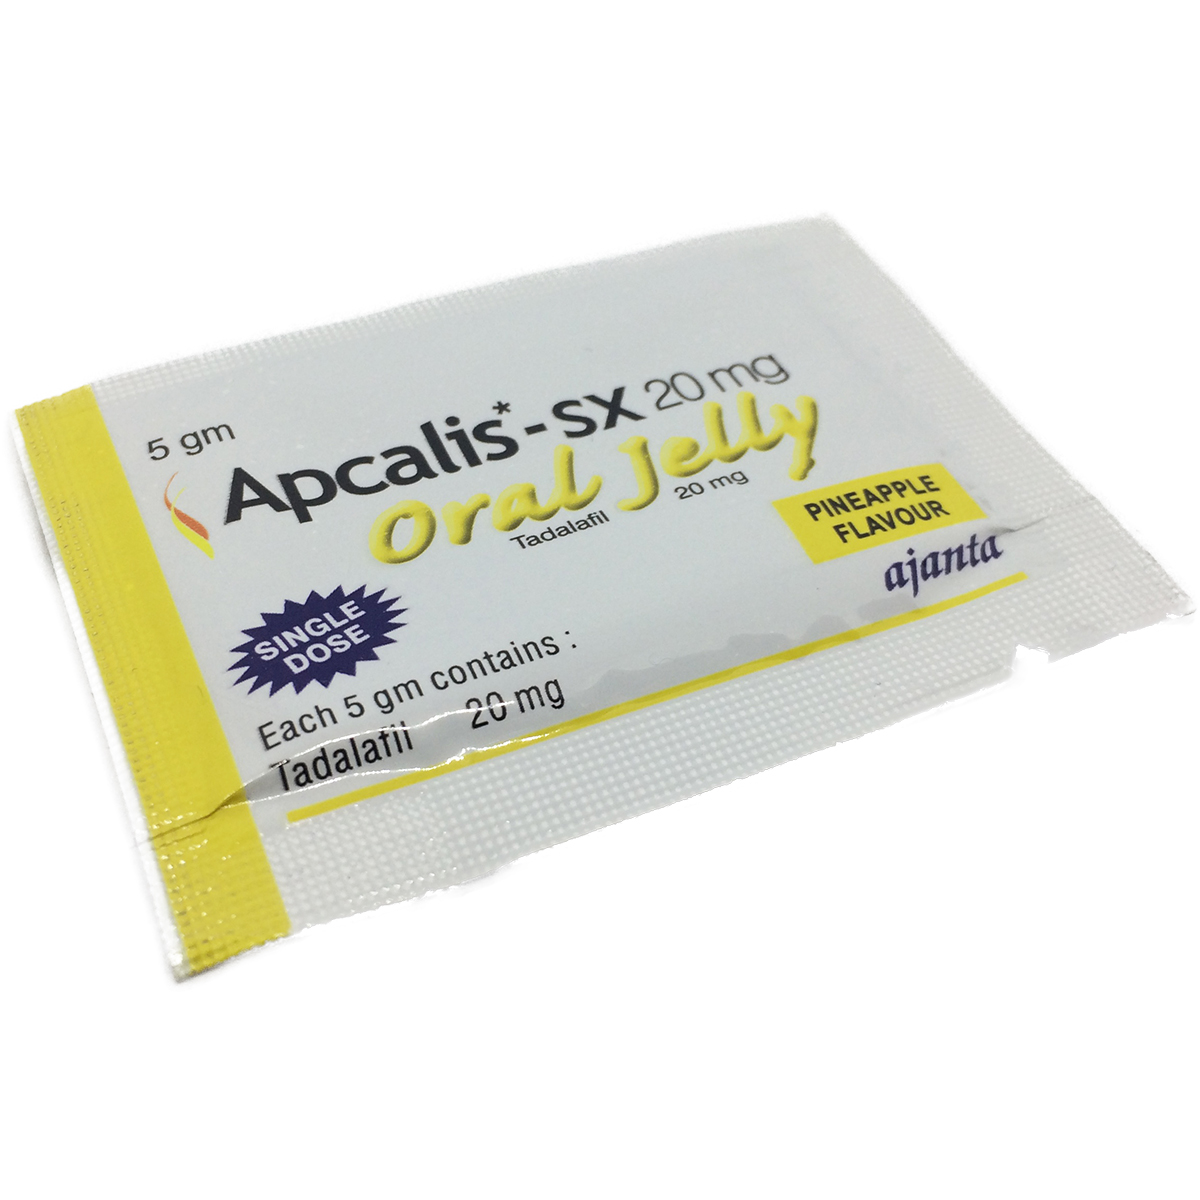 Купить Apcalis-sx Oral Jelly x 7 шт